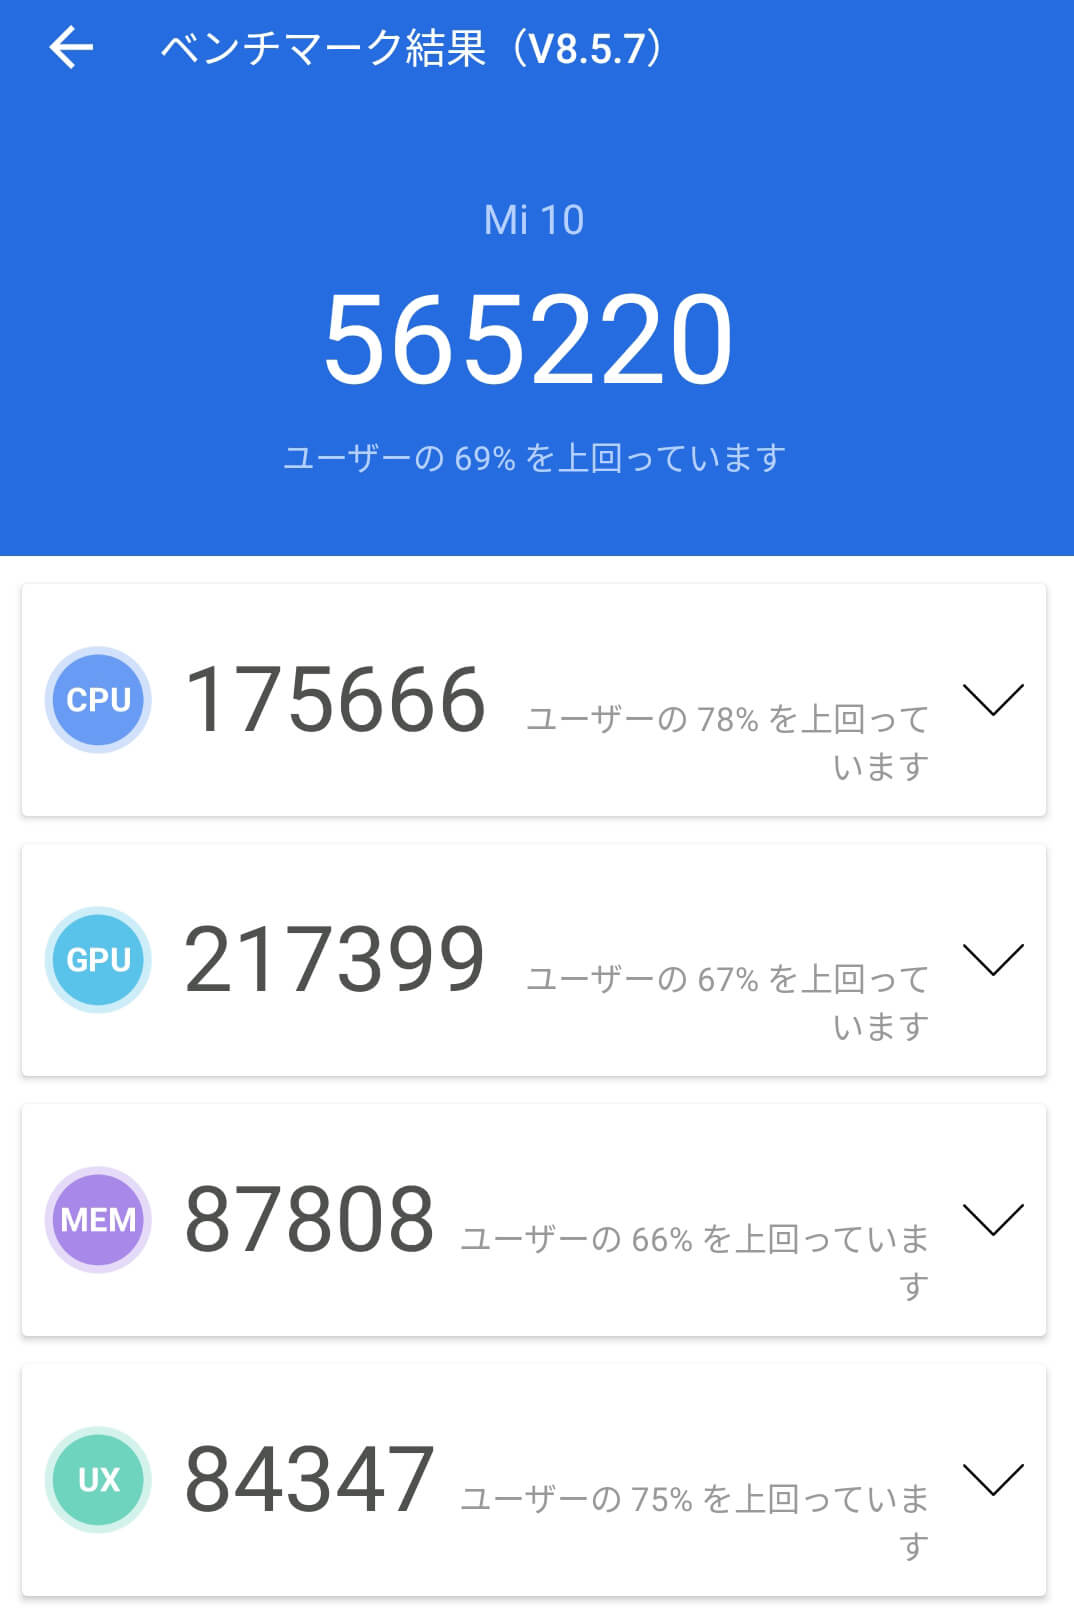 Xiaomi Mi 10のAntutuベンチマークスコア計測2回目は565220